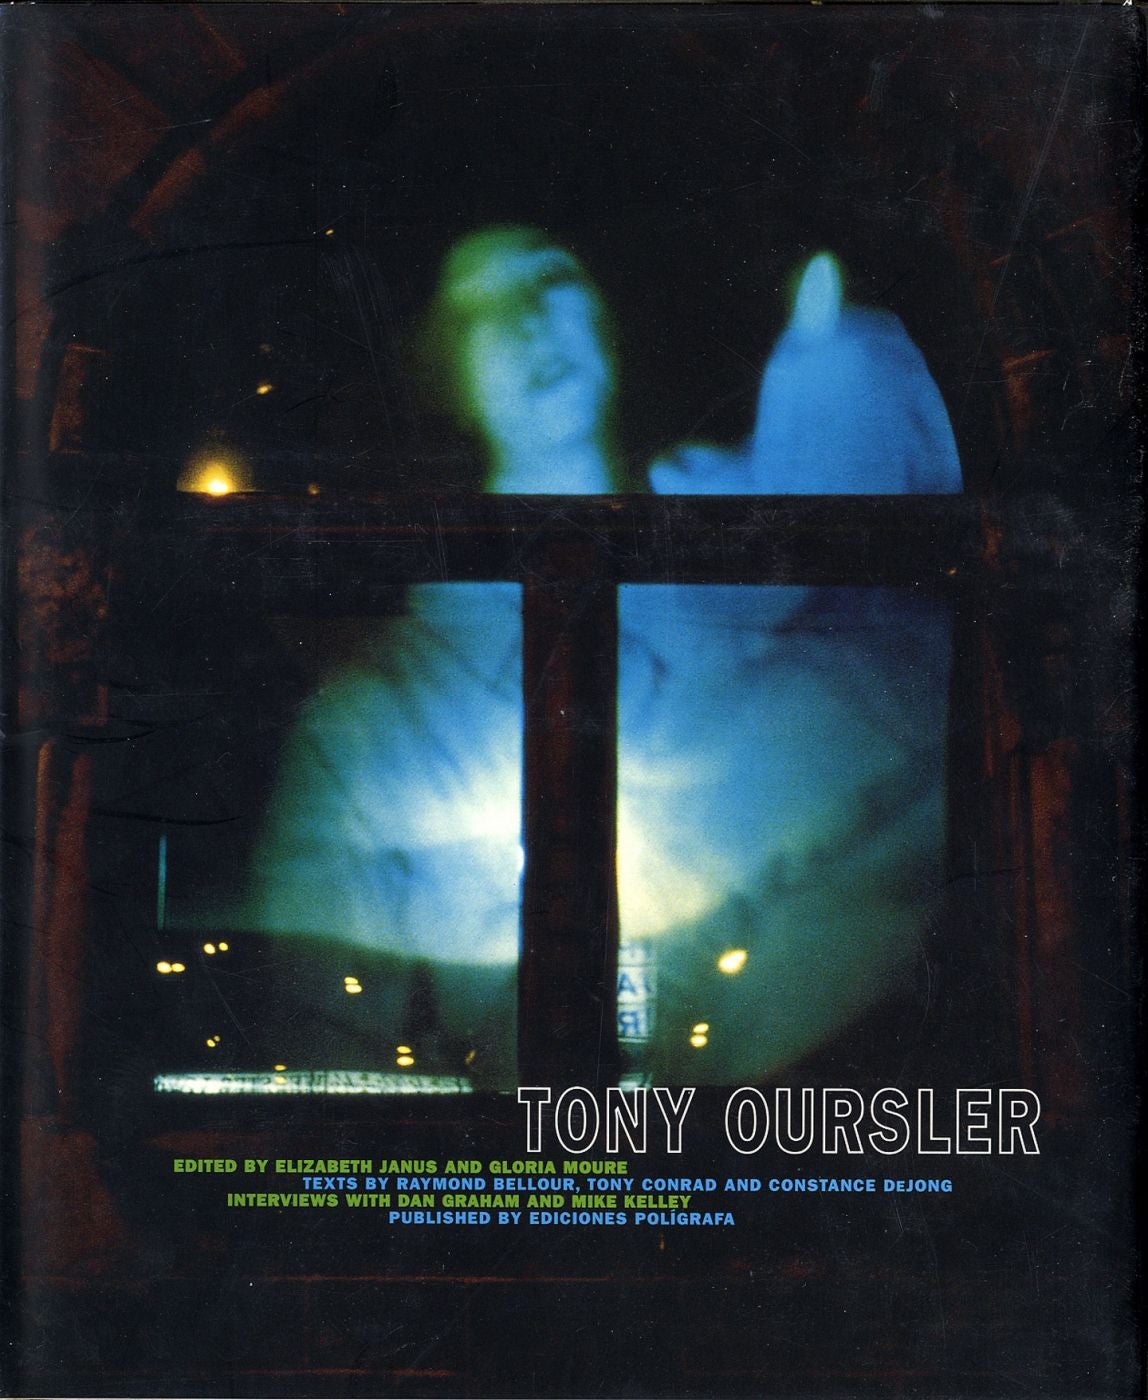 Tony Oursler (Ediciones Polígrafa)